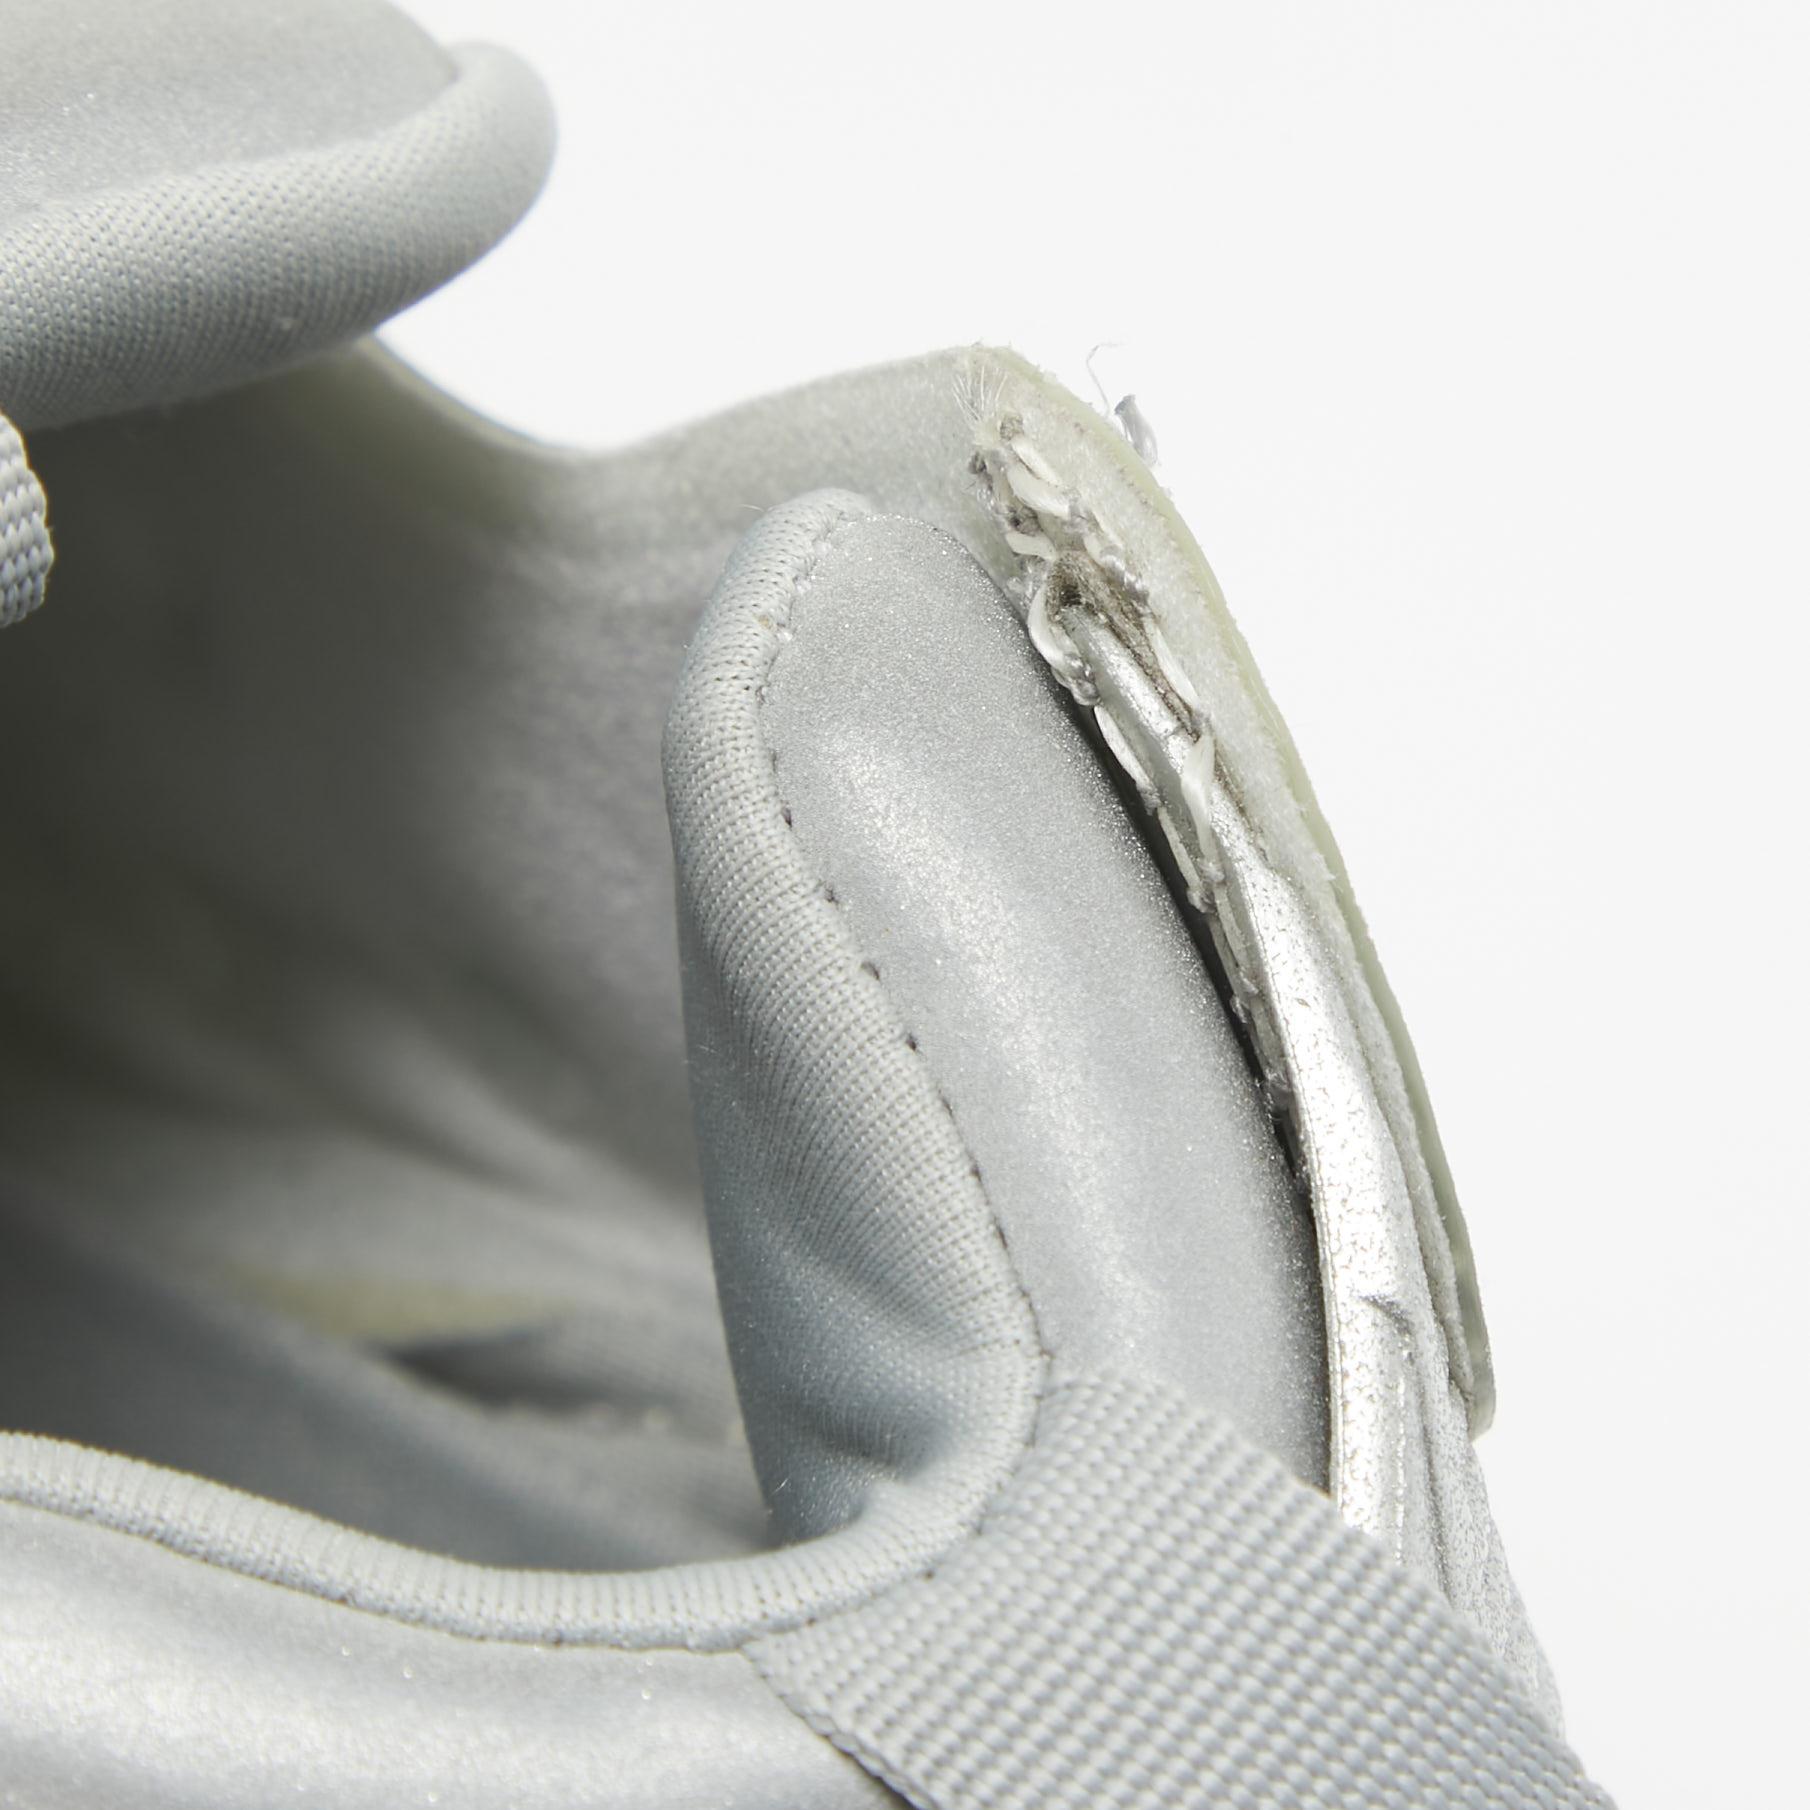 Vetements x Reebok Grey Reflective Fabric Instapump Fury Sneakers Size 38.5 For Sale 4